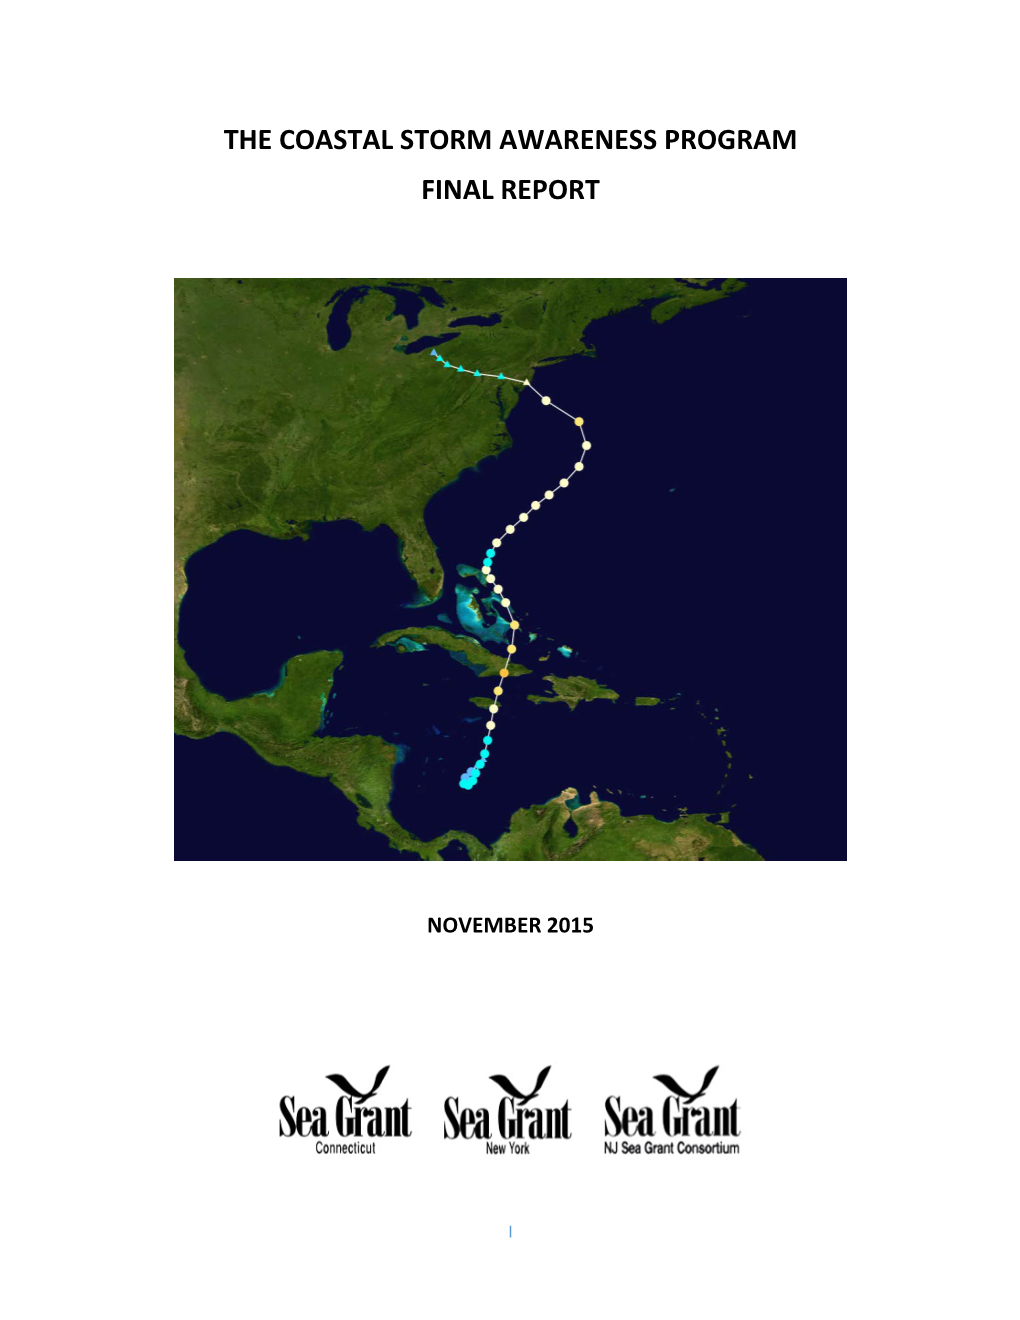 The Coastal Storm Awareness Program Final Report